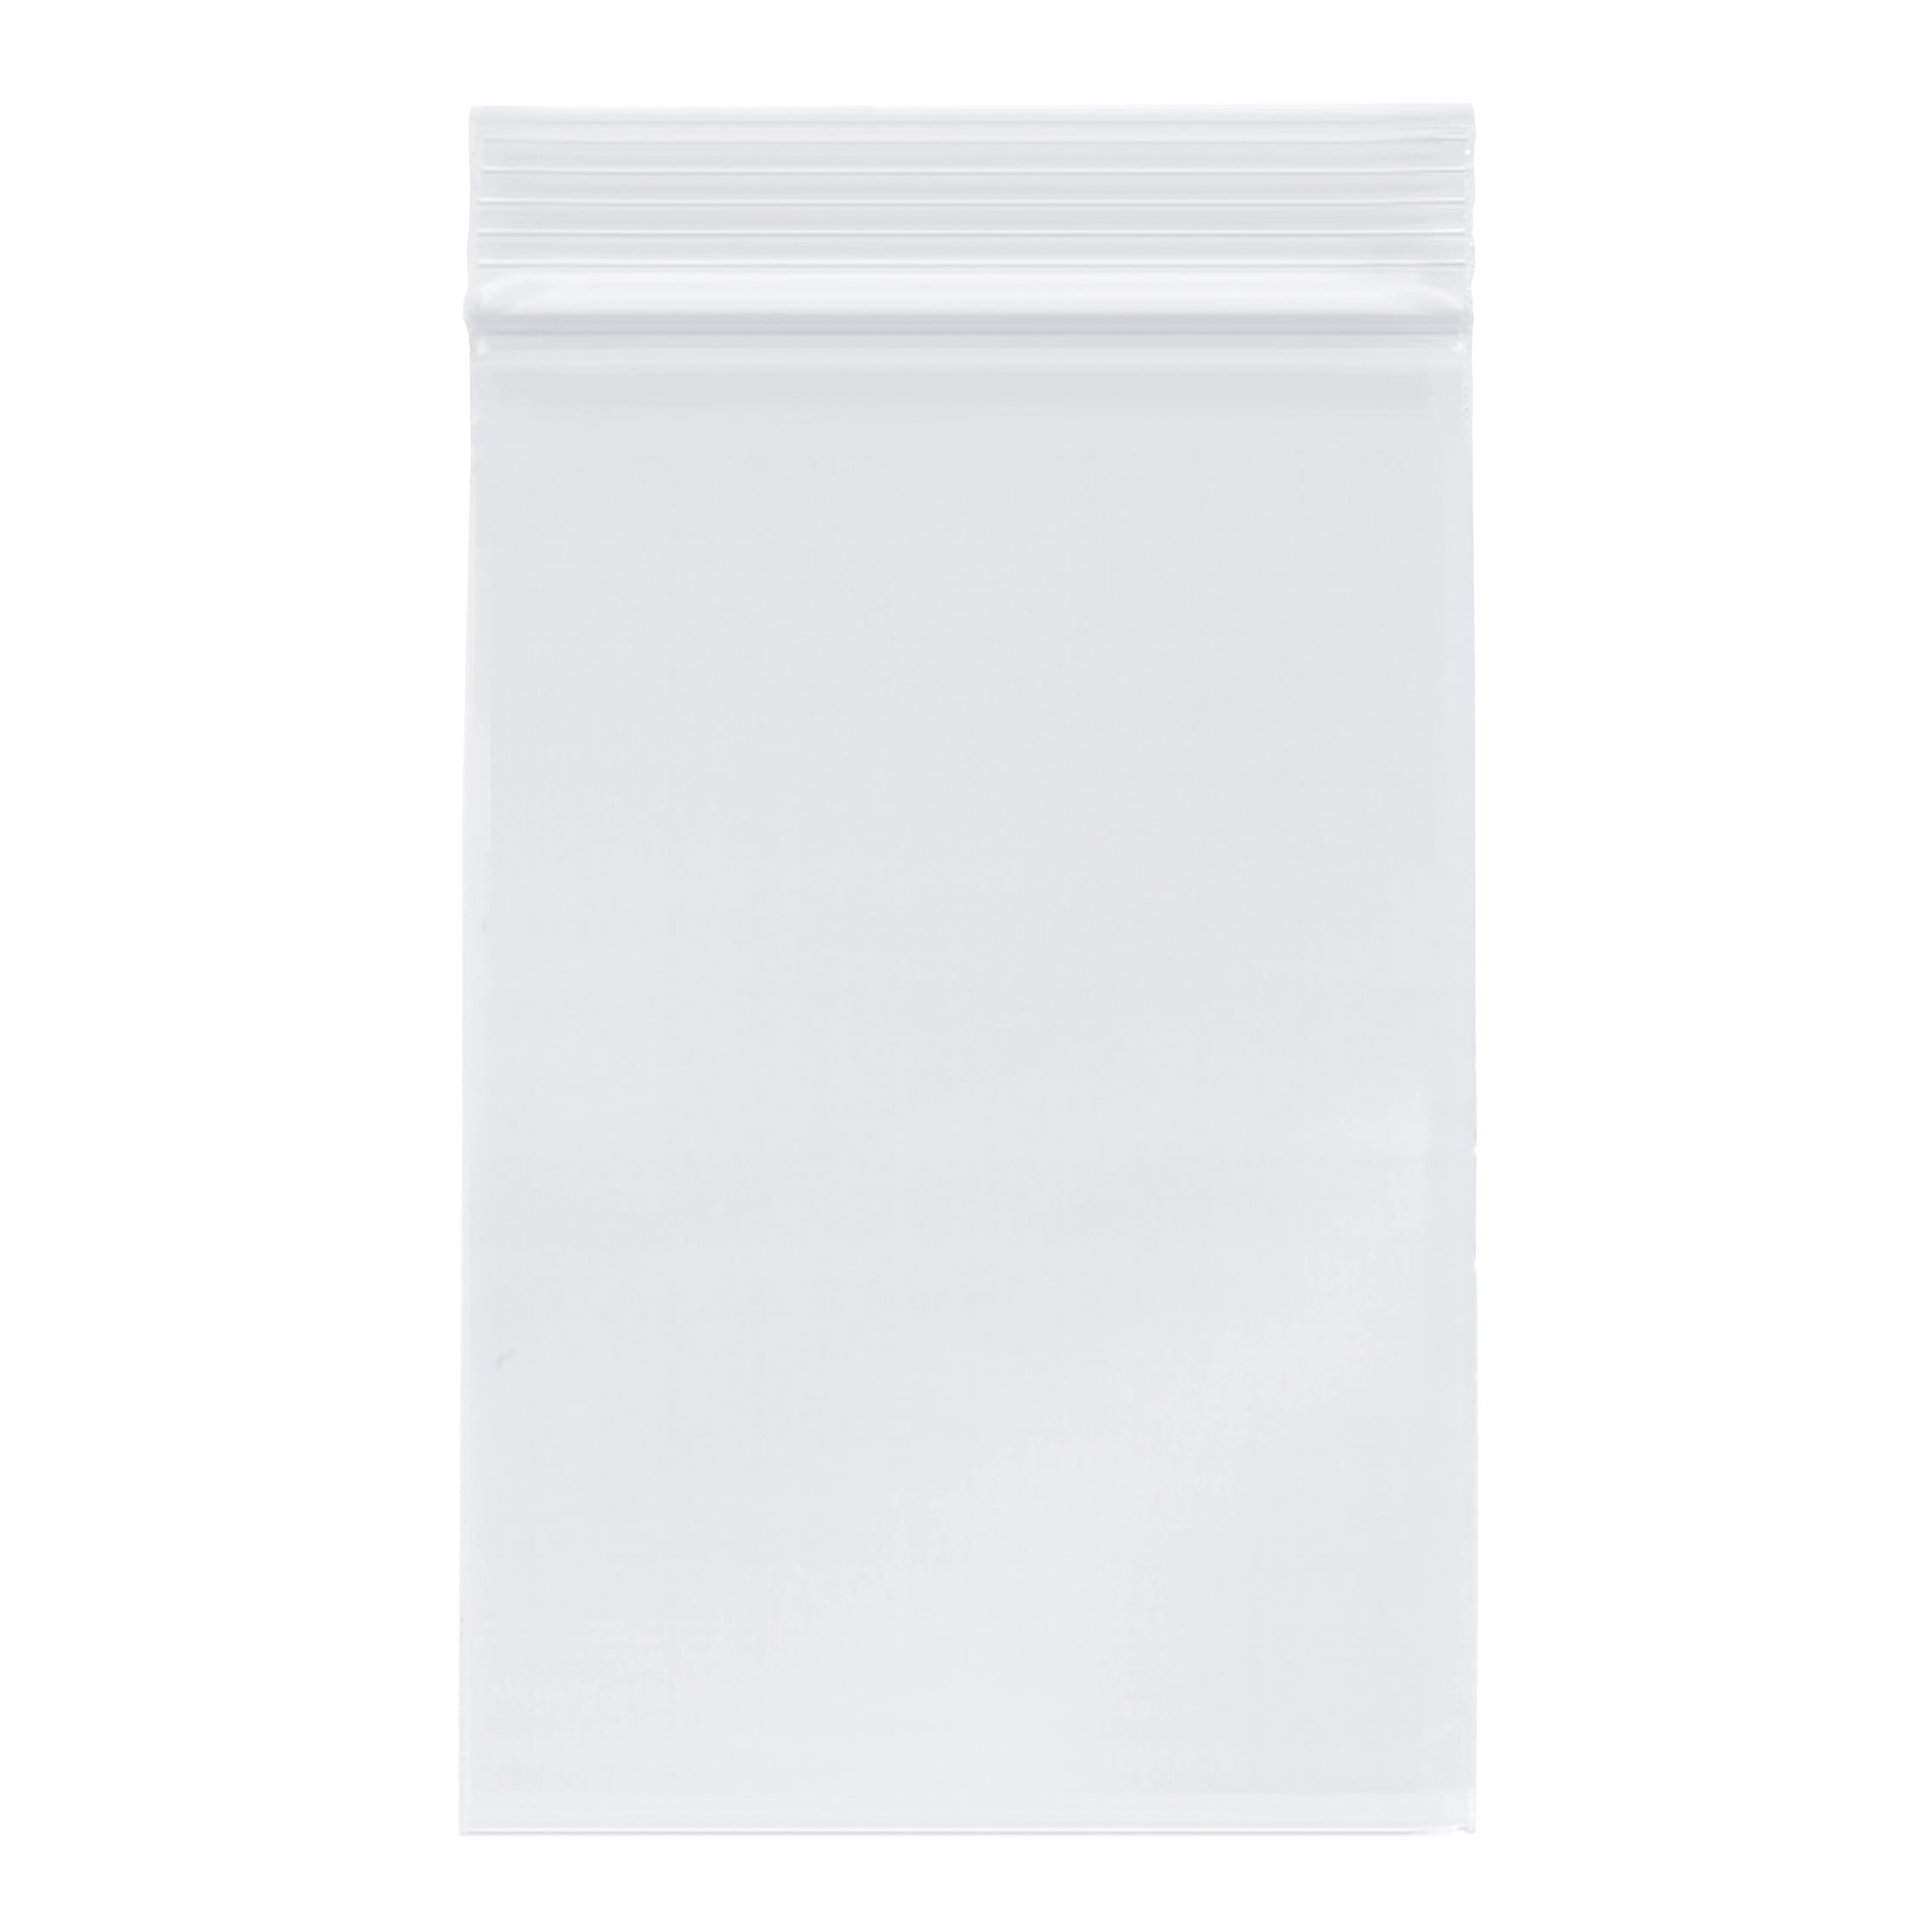 2000 Ziplock Clear Plastic White Bags 4" x 2.75" Wholesale Lot 